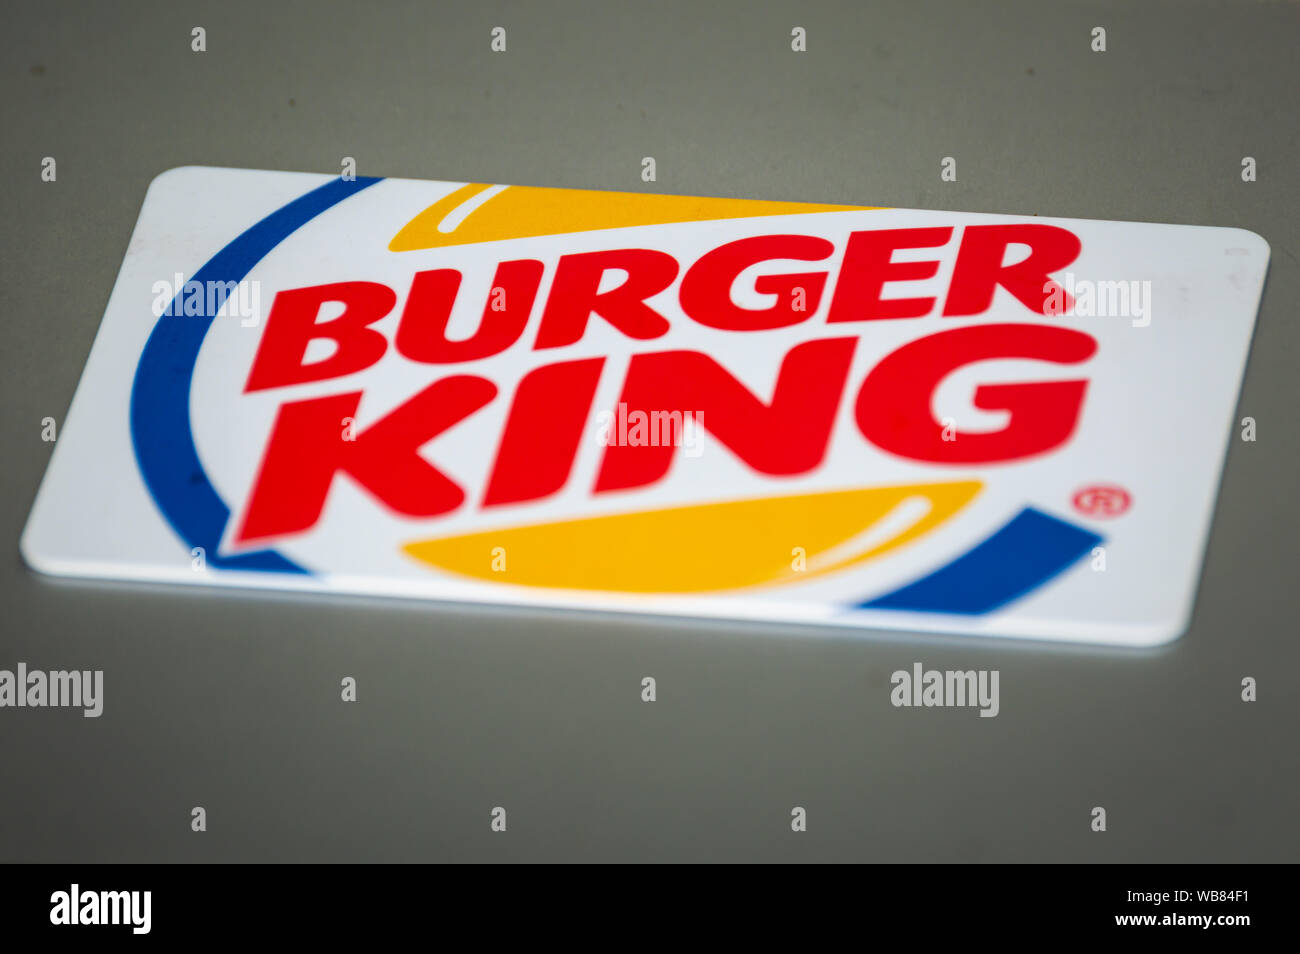 Un Burger King avec carte-cadeau stockés de valeur en espèces. Fast food restaurant. Banque D'Images